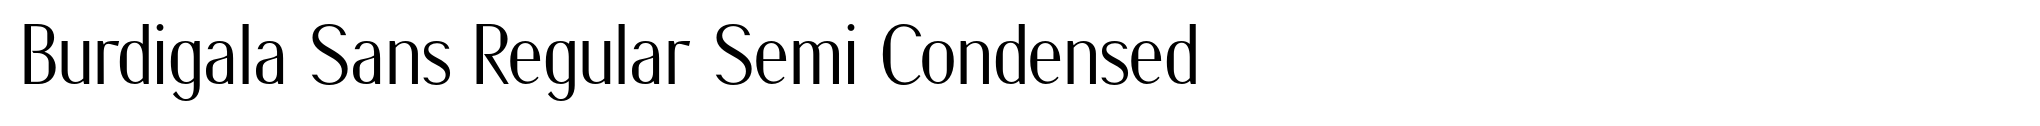 Burdigala Sans Regular Semi Condensed image